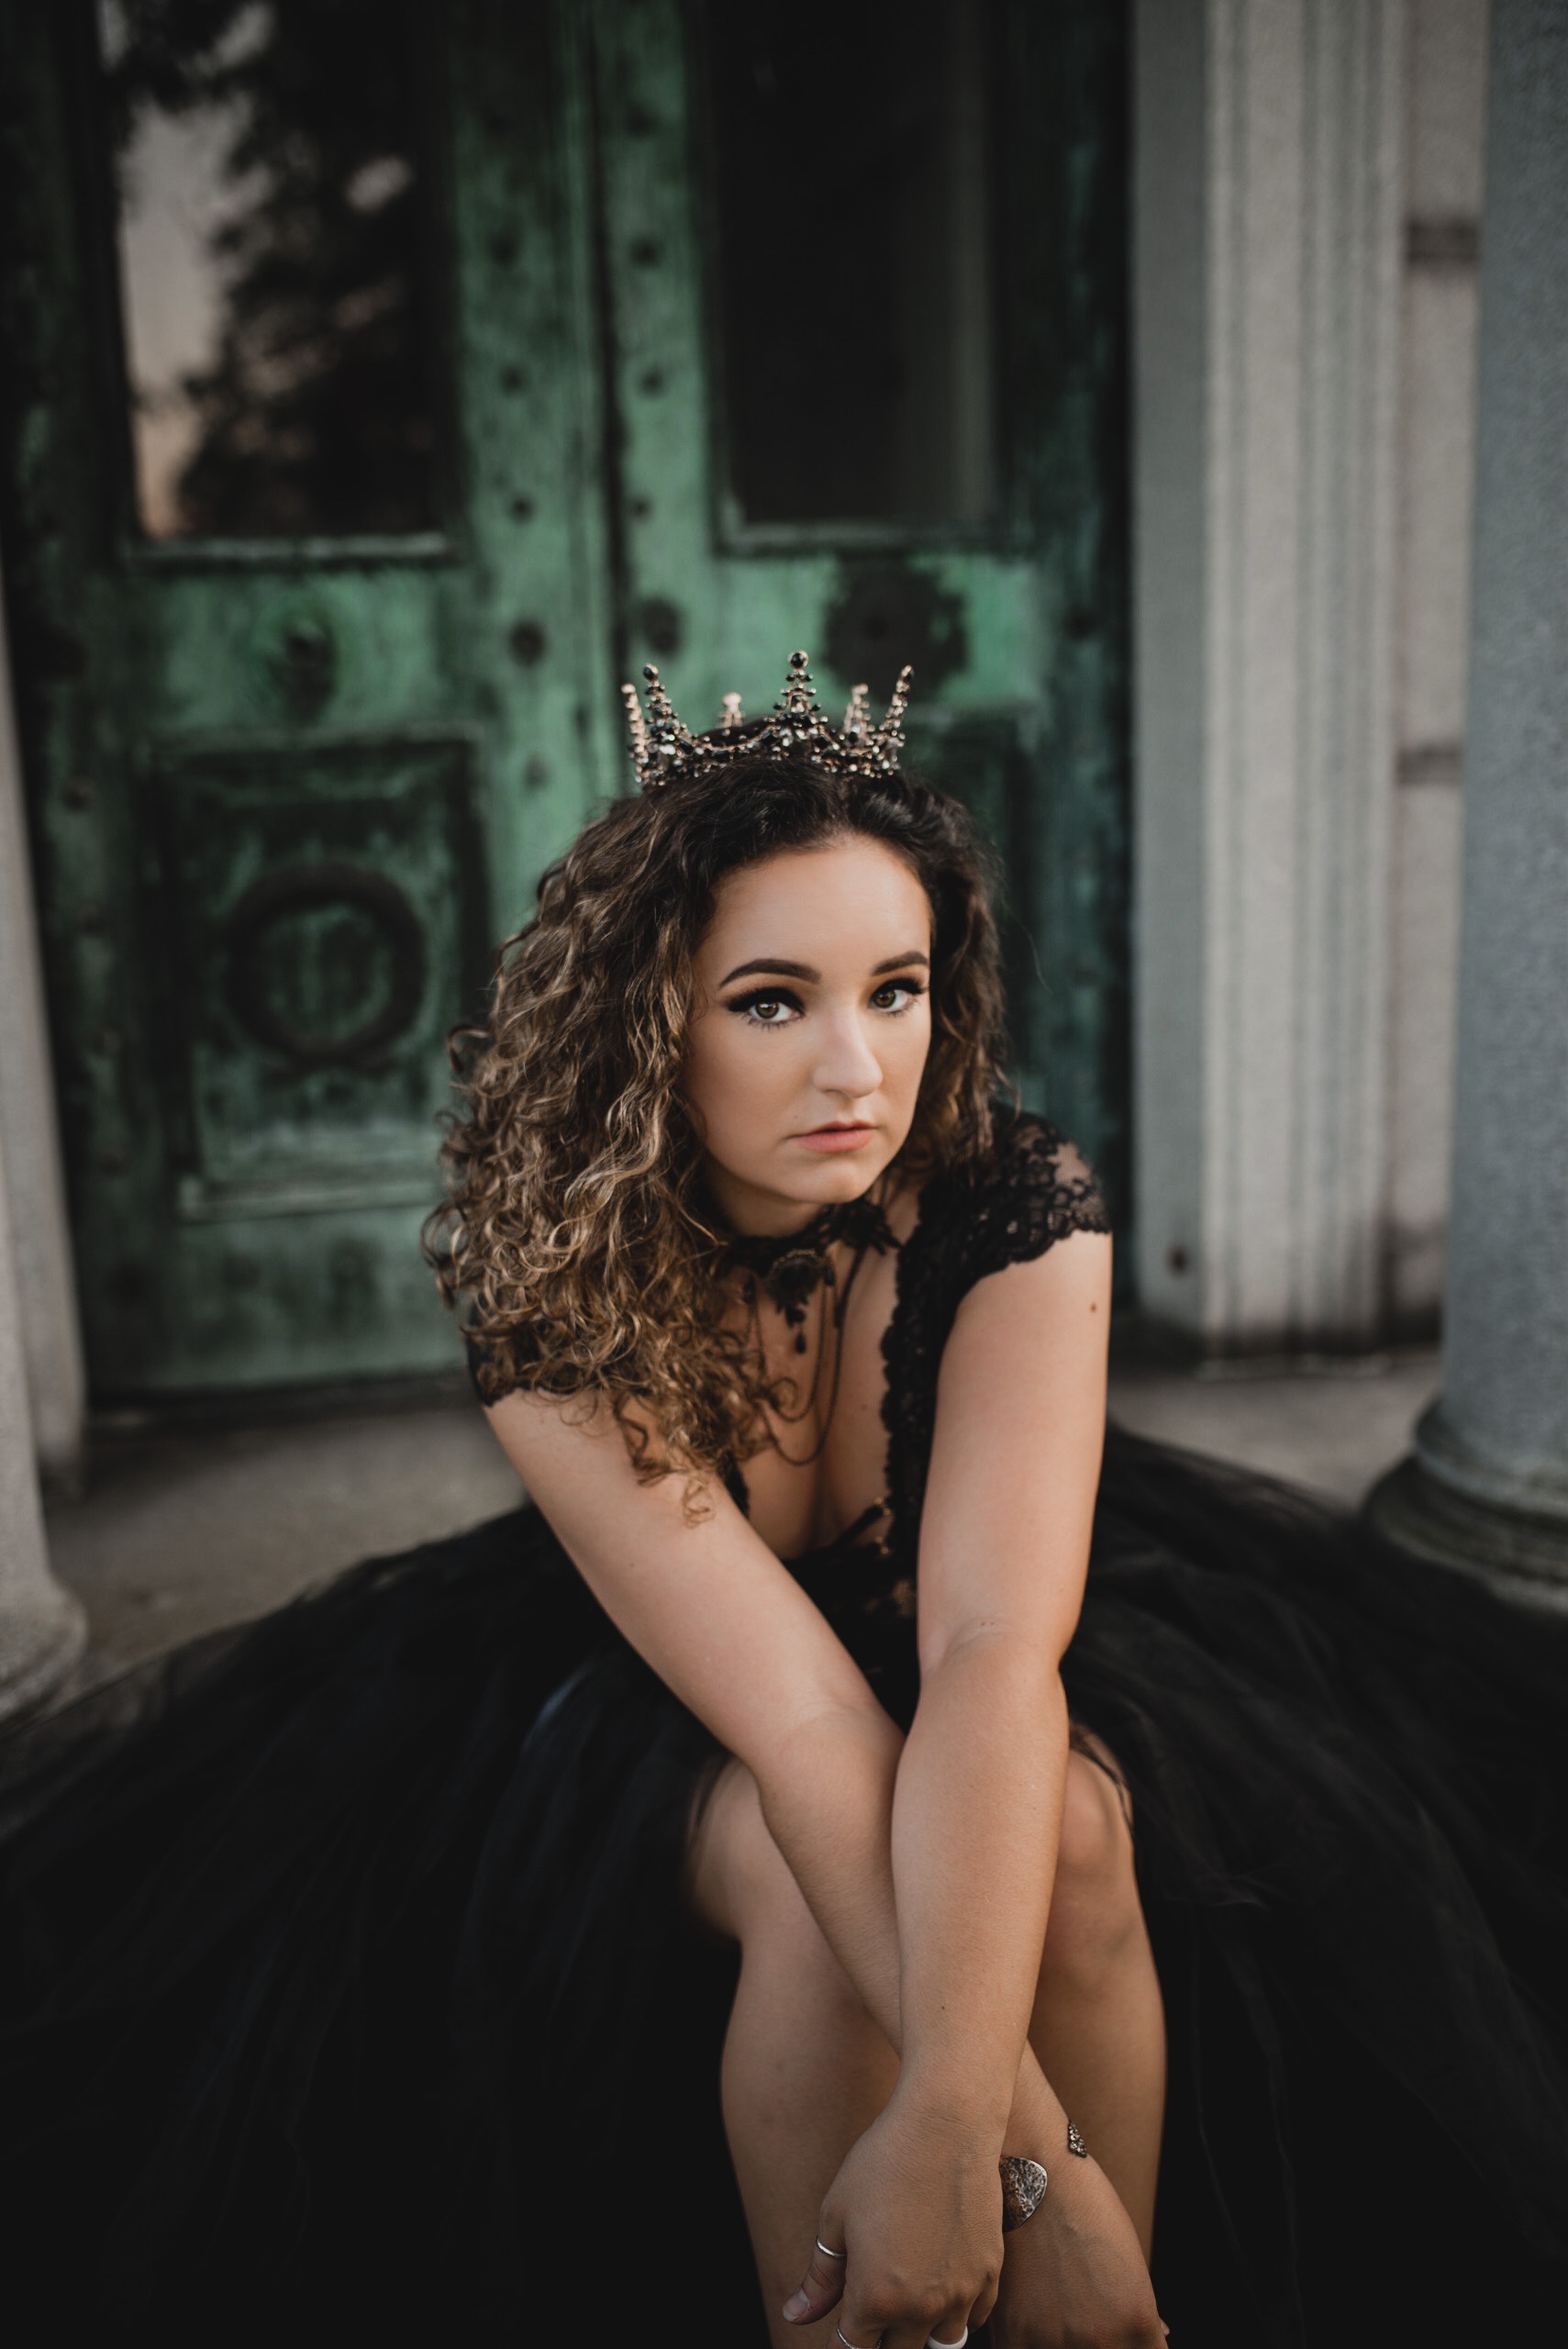 Dirty thirty rip to my youth black dress princess session boudoir graveyard sunset Savannah Ohio photographer  crown